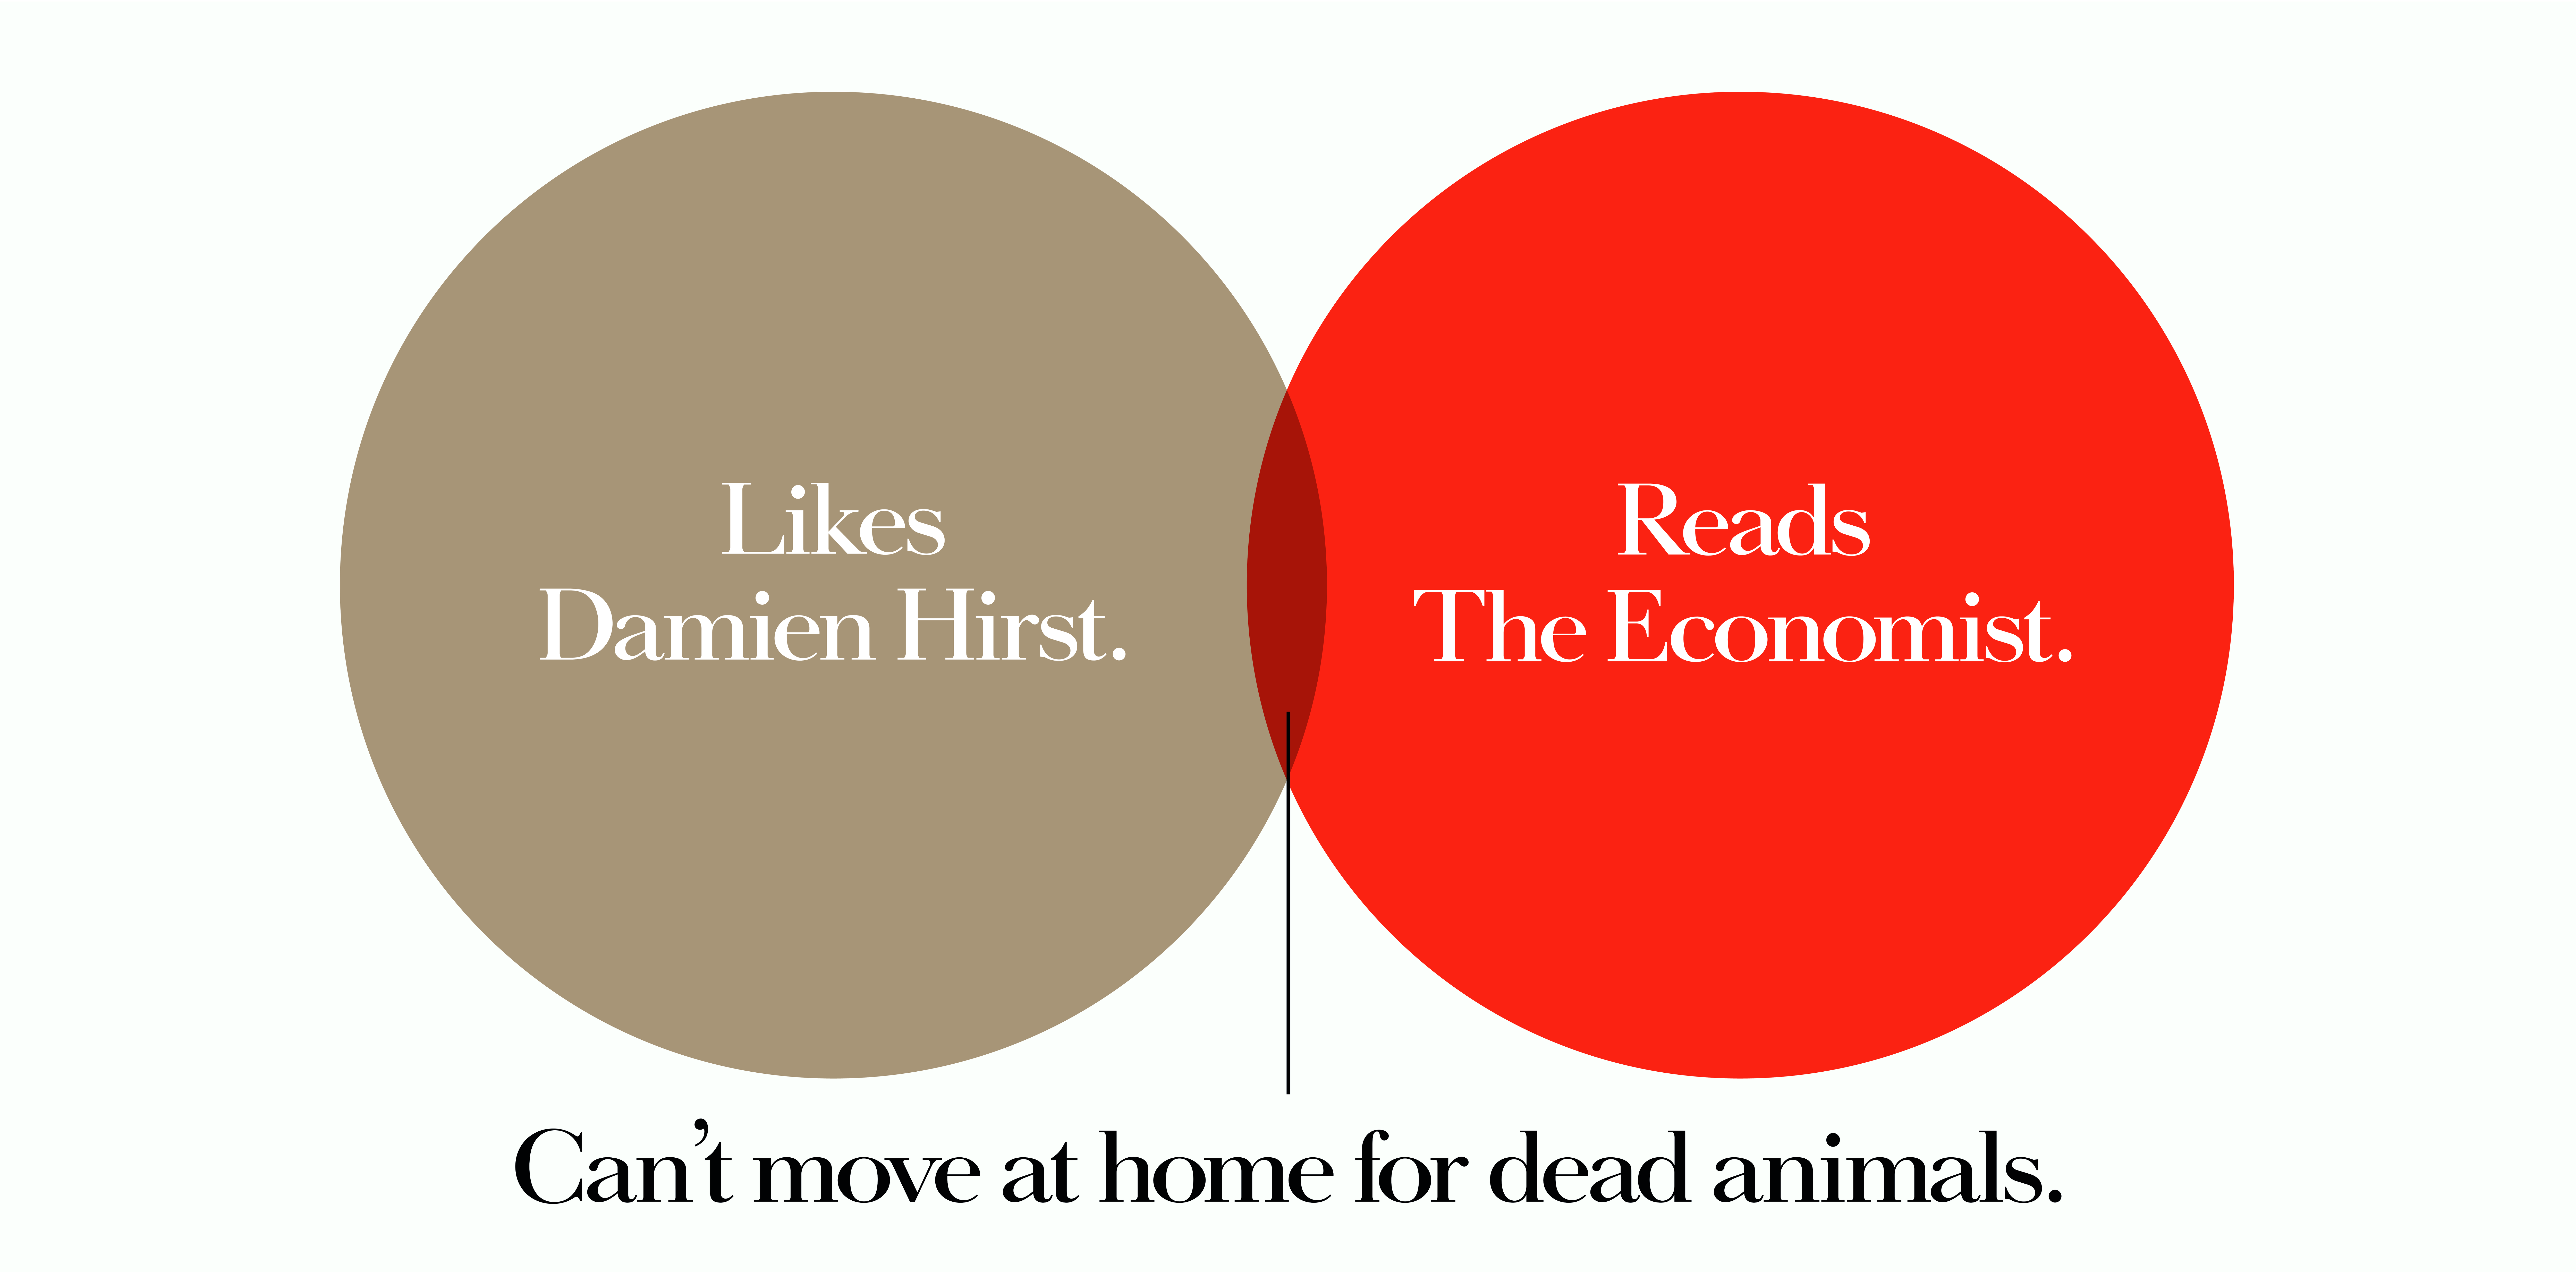 'Likes Damien' The Economist, Dave Dye, Venn, 48 sheet, AMV-BBDO